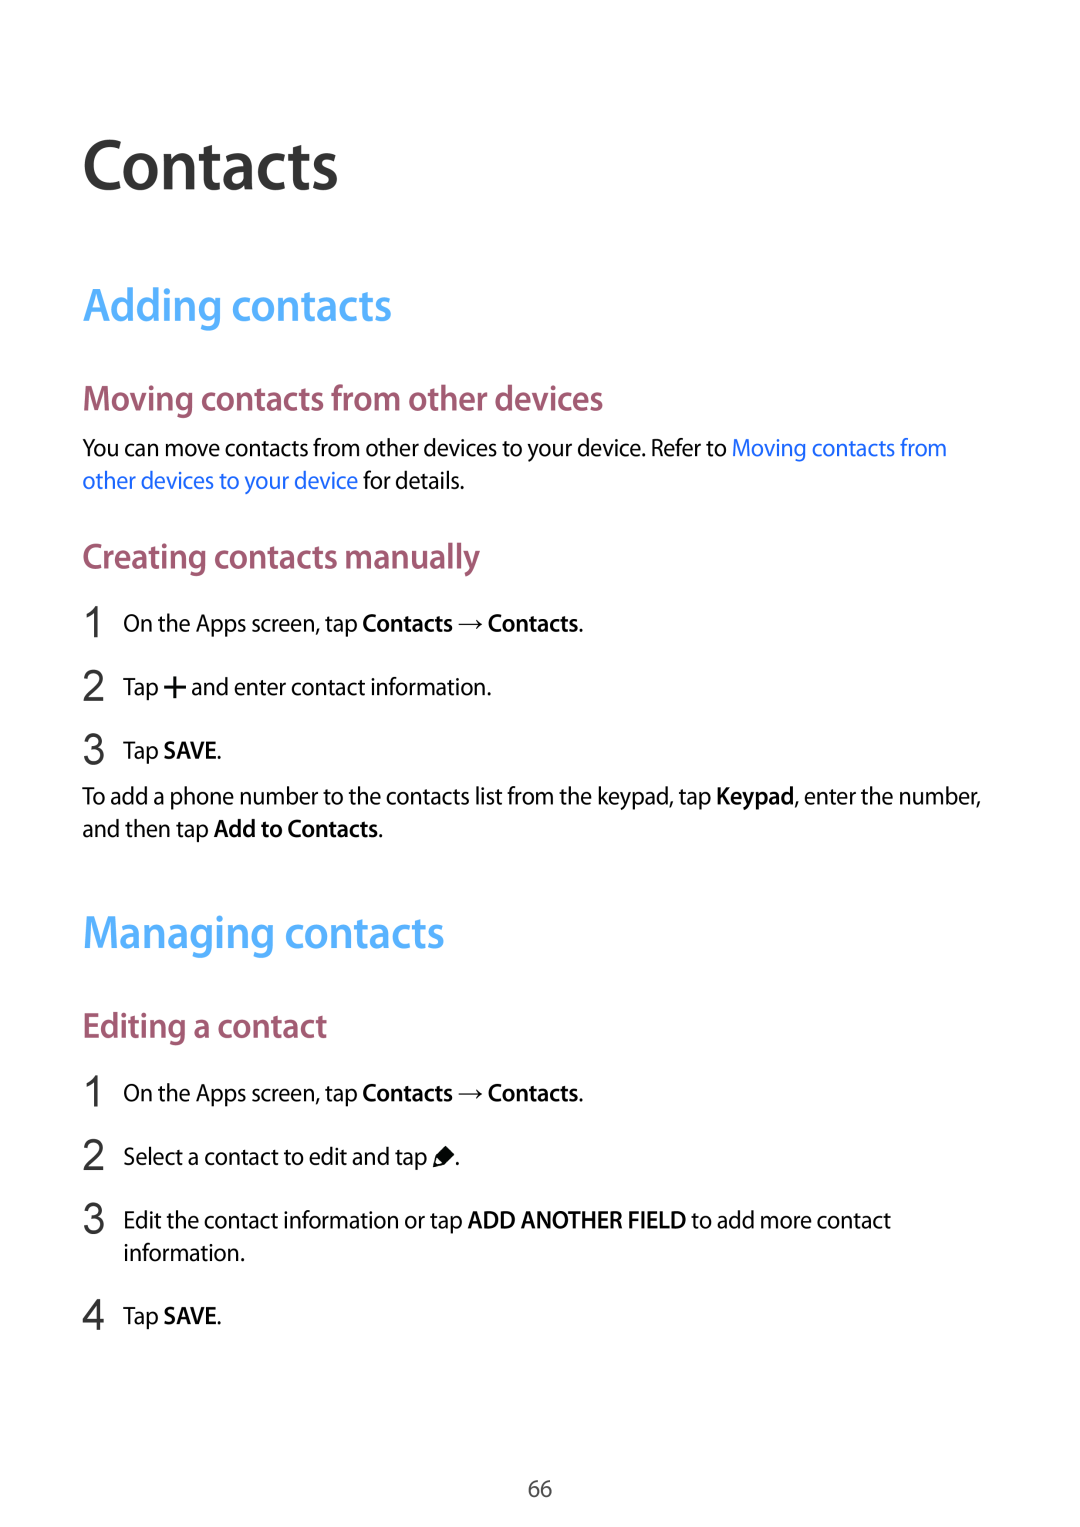 Samsung SM-G901FZKADBT Contacts, Adding contacts, Managing contacts, Moving contacts from other devices, Editing a contact 